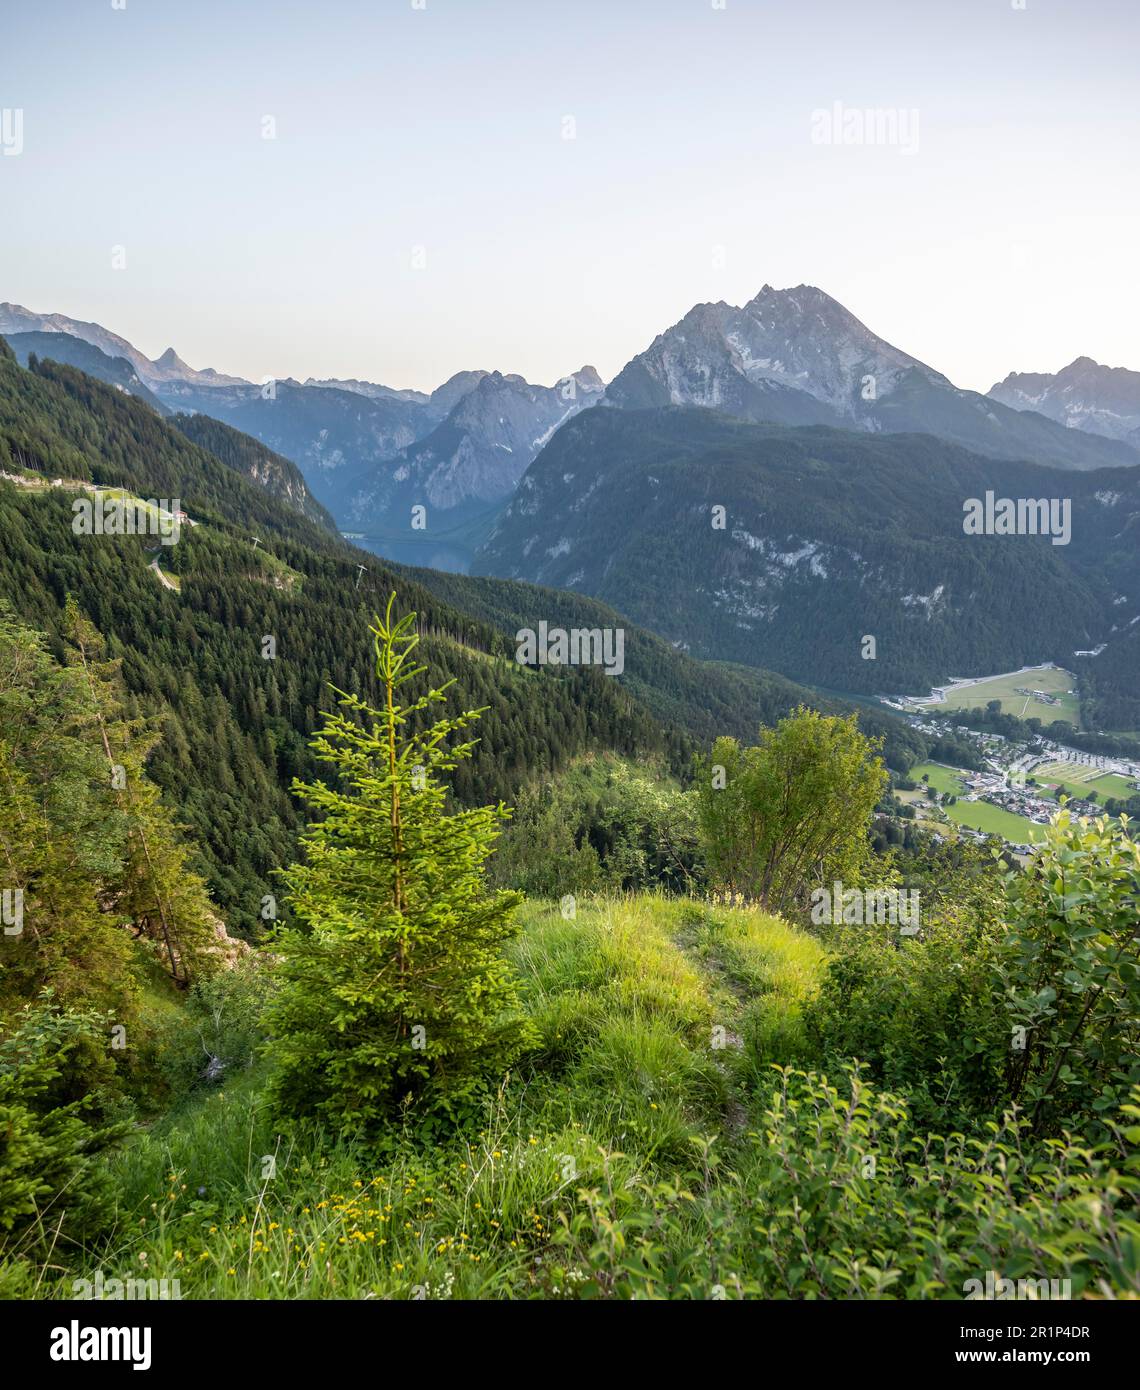 Hinterer Brandkopf, Watchmann e le montagne sullo sfondo, Berchtesgadener Land, Baviera, Germania Foto Stock